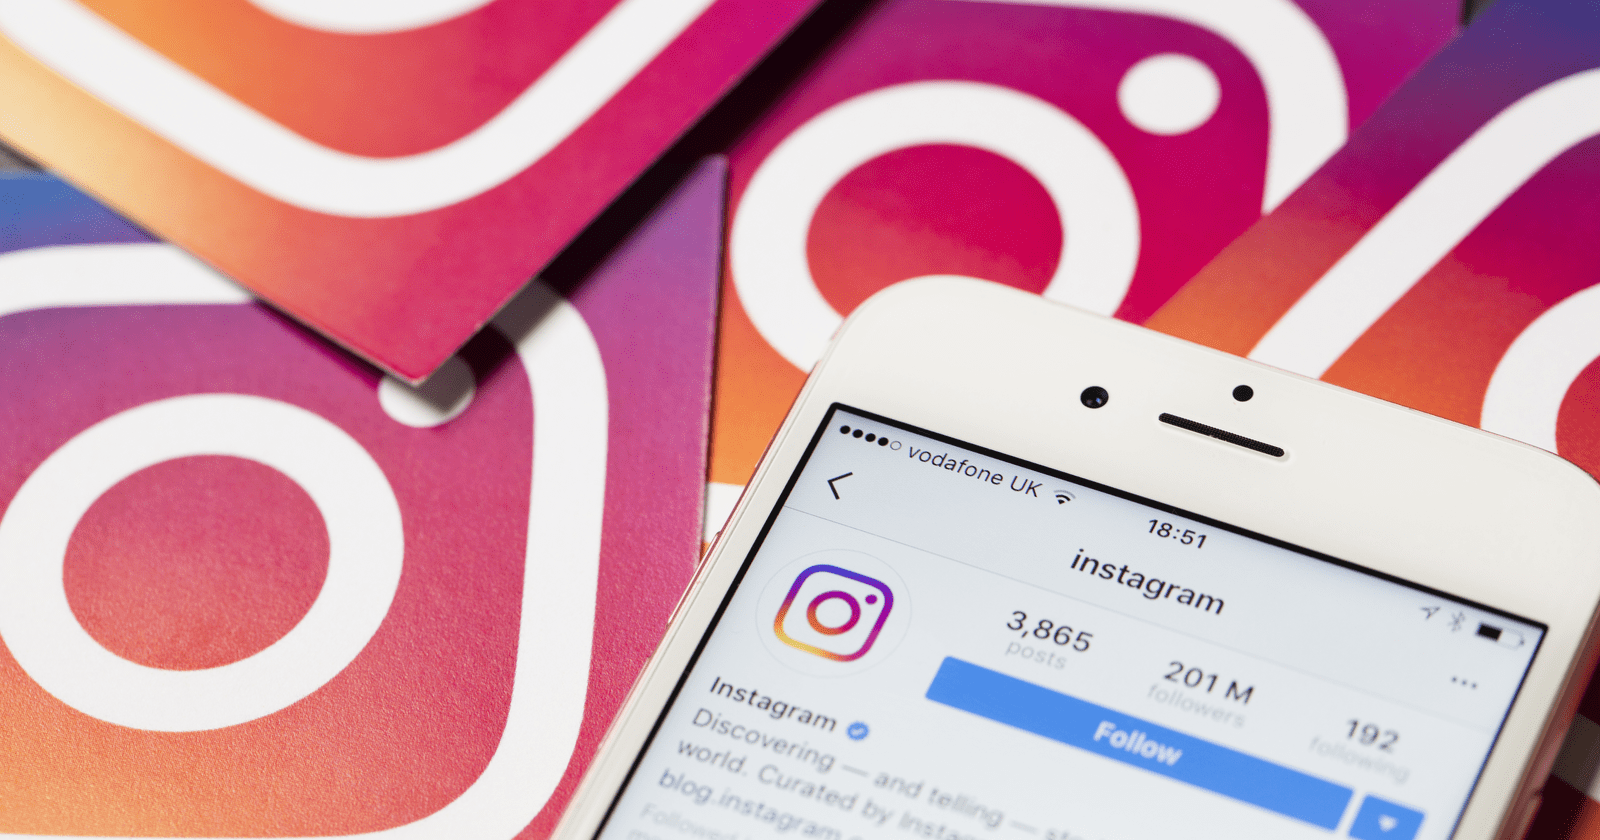 Why Instagram is a popular social media platform?